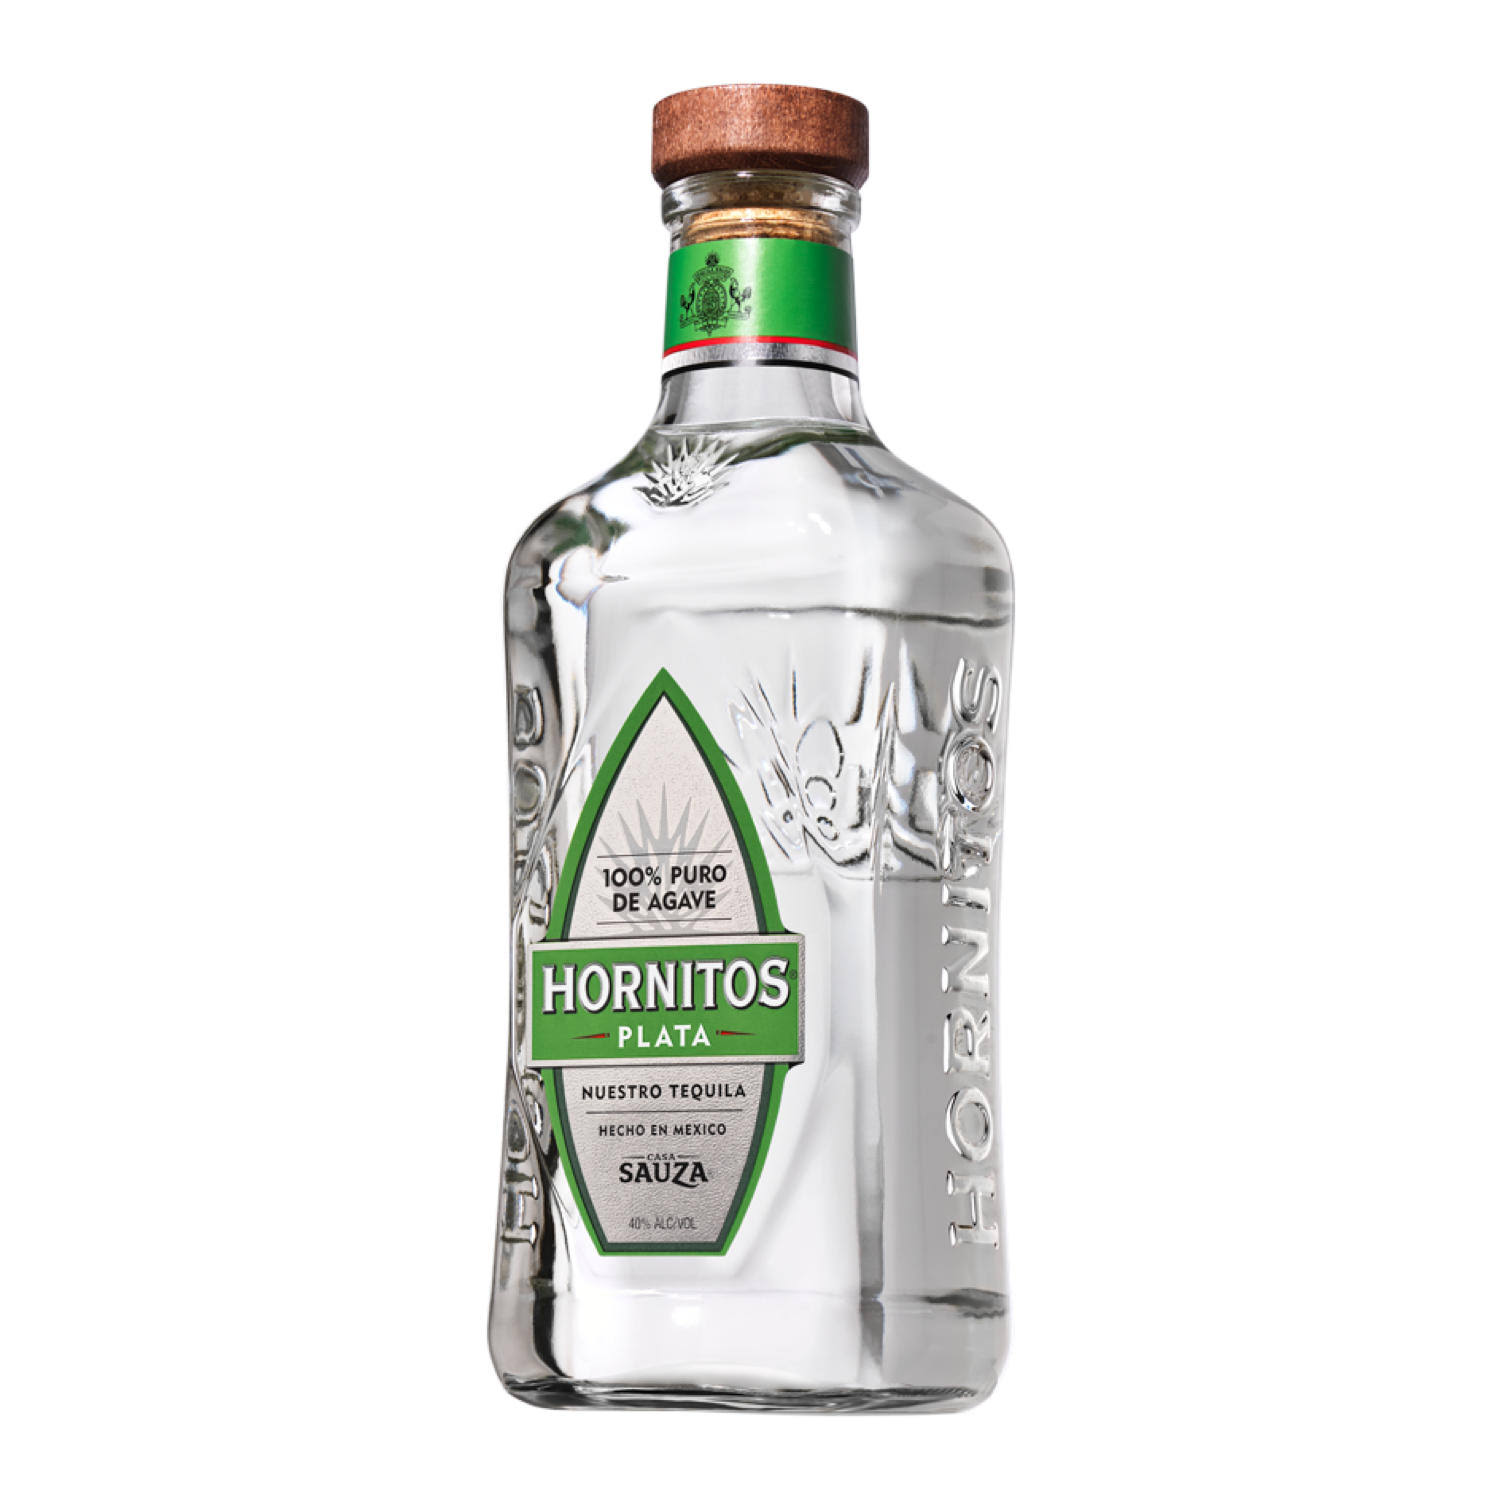 Sauza Plata Hornitos Tequila - 1 L Bottle